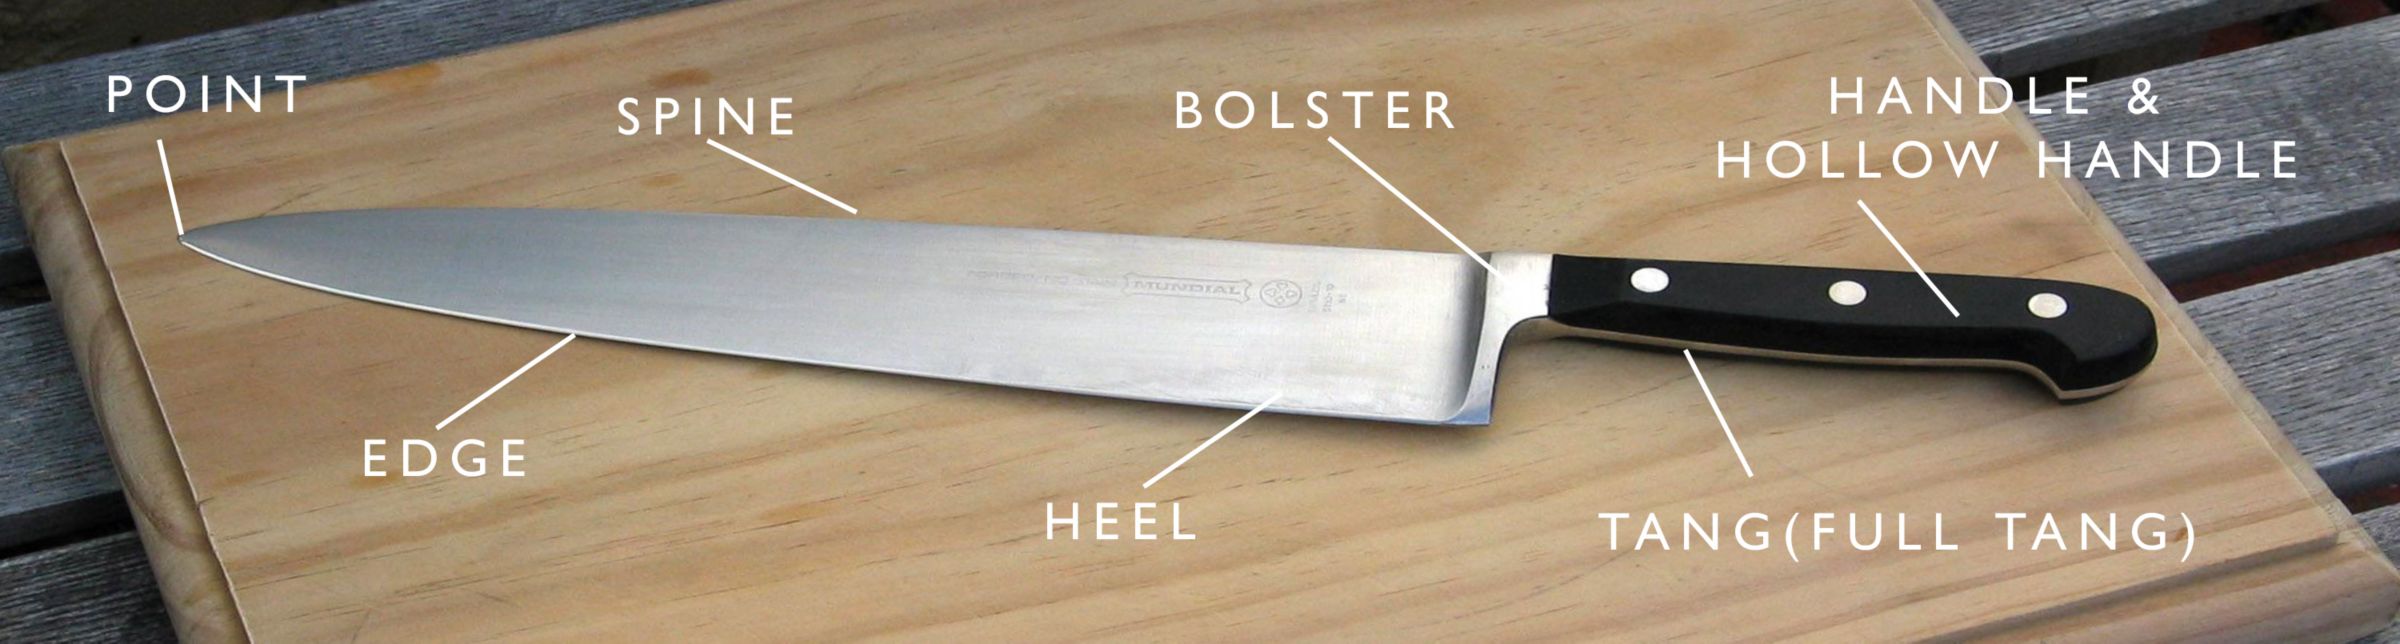 Knives diagram